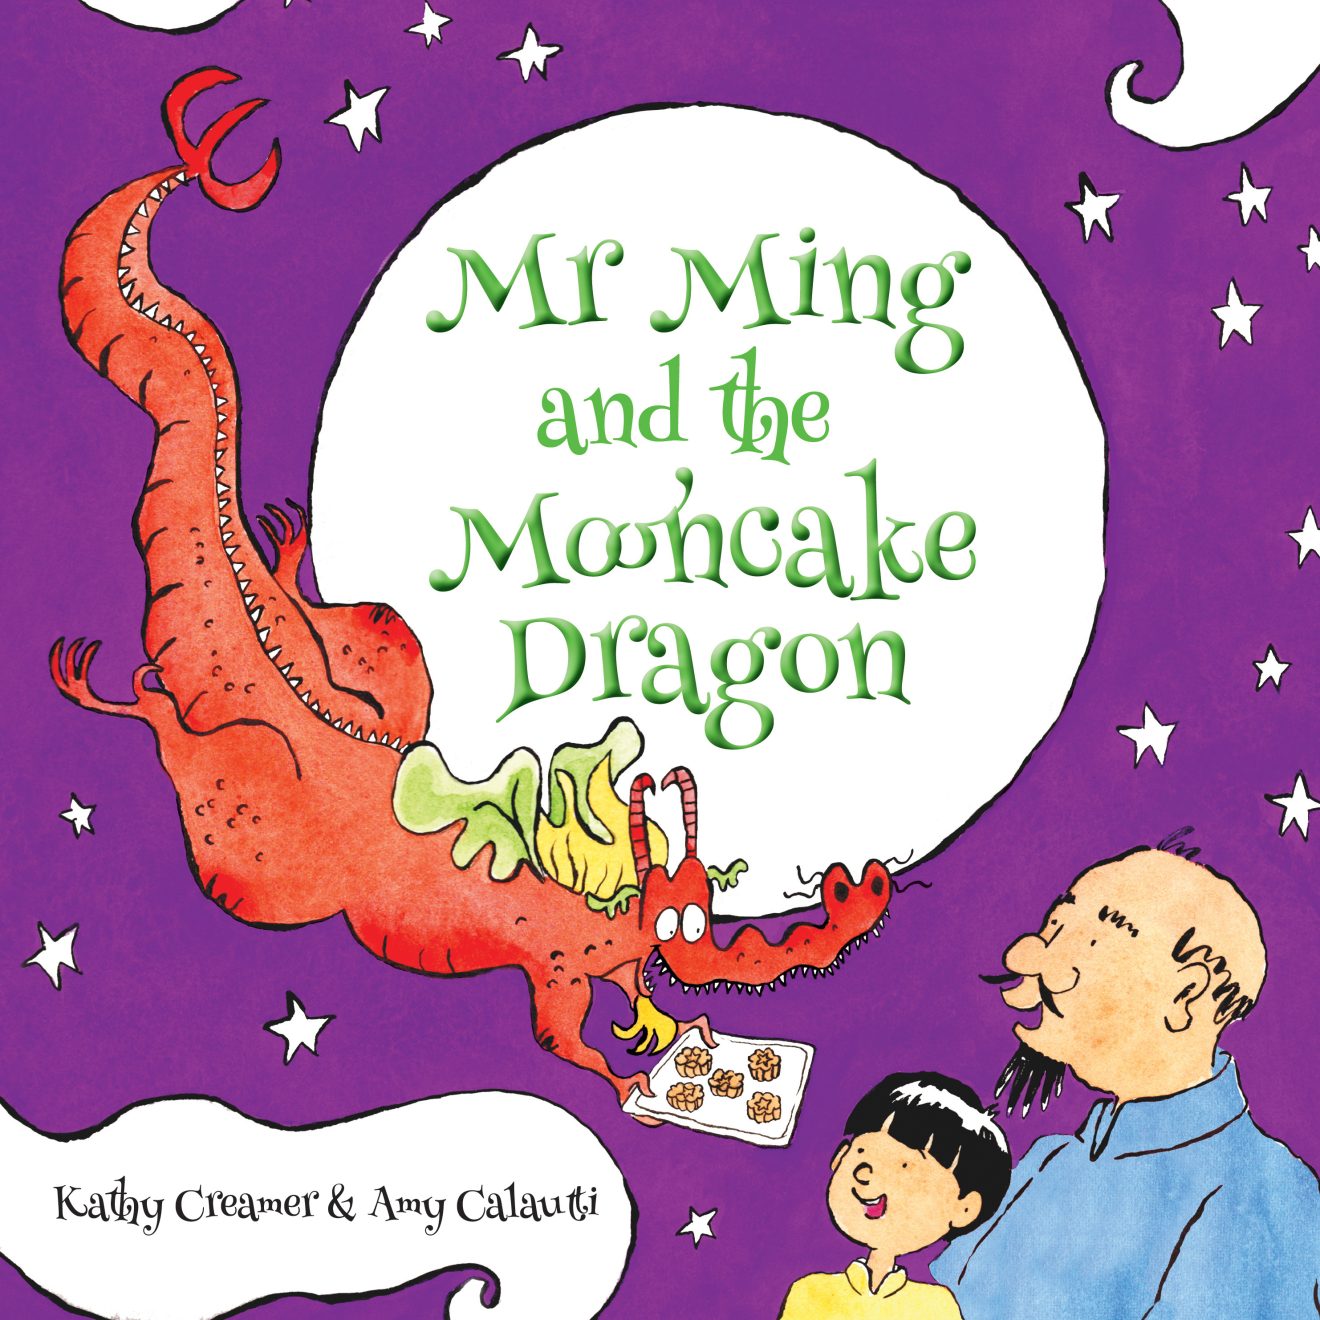 Copy of Mr Ming audiobook Cover v3